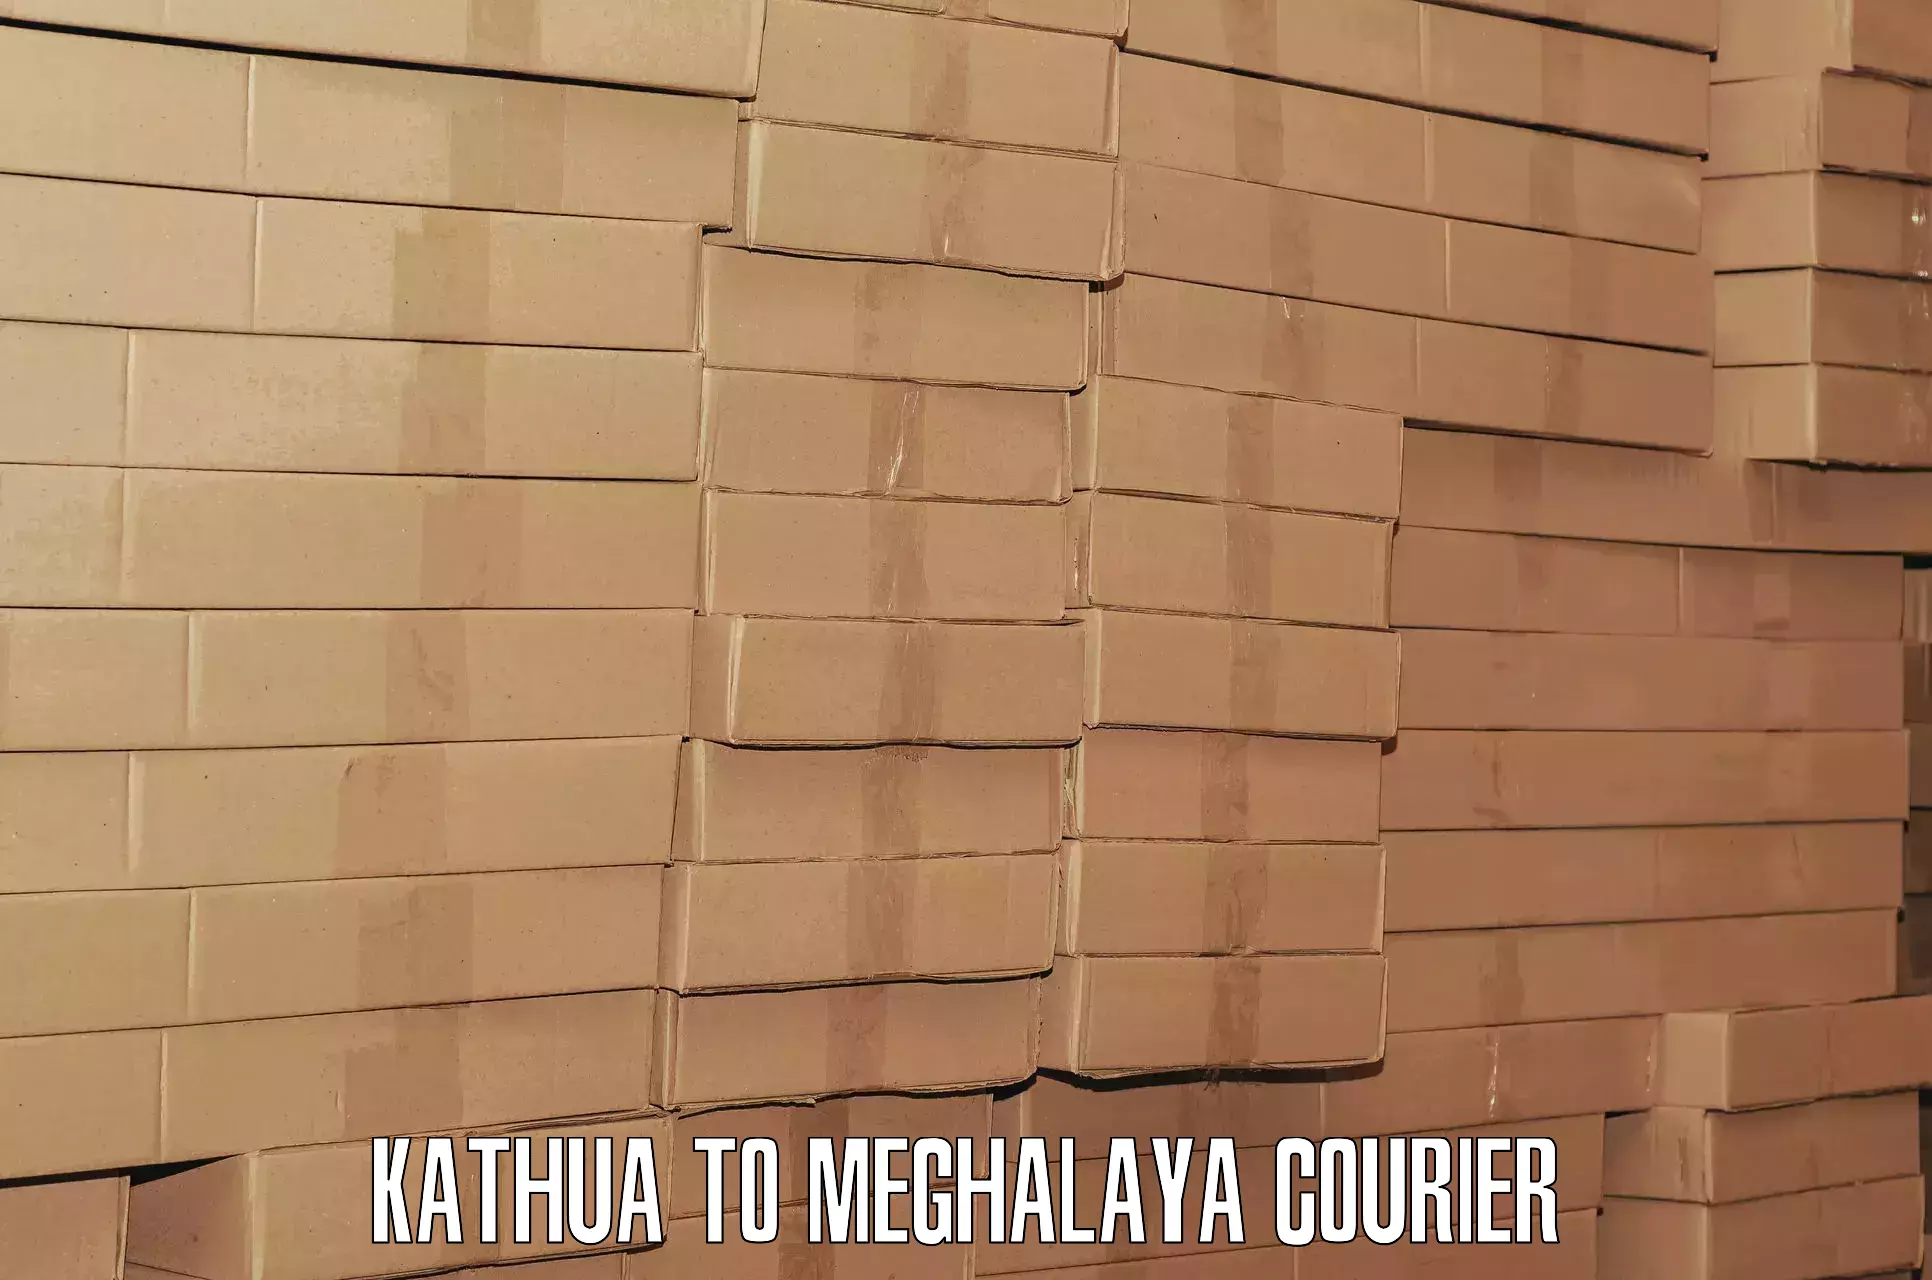 Door-to-door baggage service Kathua to Meghalaya